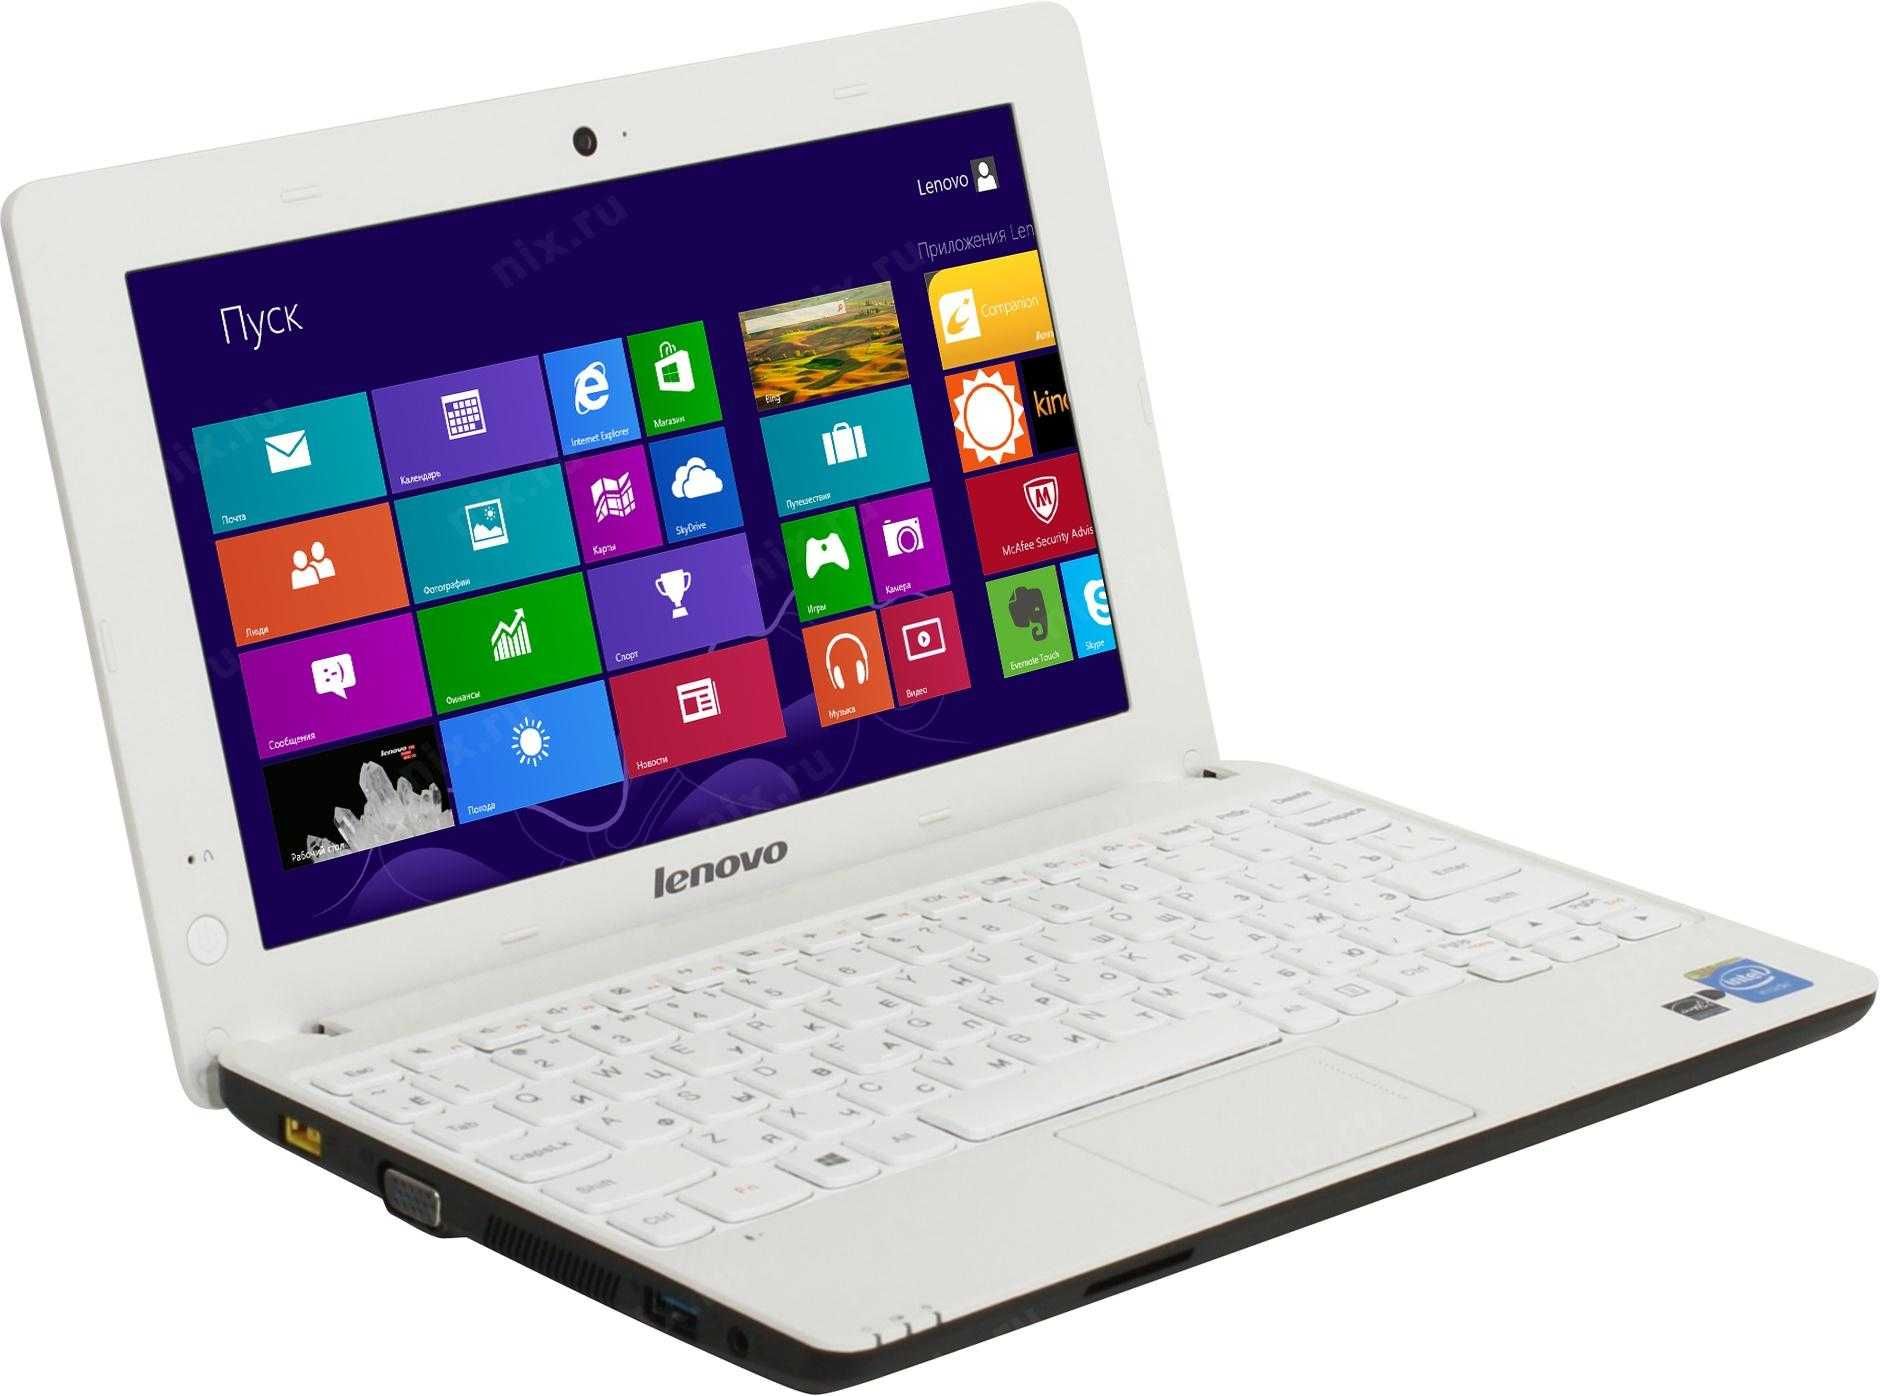 Ноутбук Lenovo E10-30 White, 10.1"(1366x768), ОЗУ 2GB, HDD 500 GB, NEW